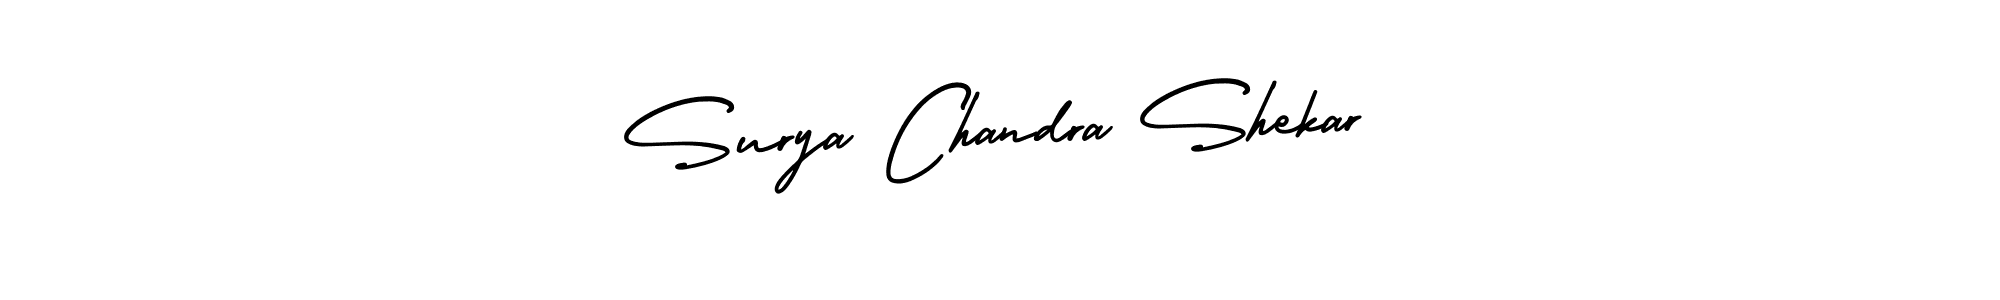 Best and Professional Signature Style for Surya Chandra Shekar. AmerikaSignatureDemo-Regular Best Signature Style Collection. Surya Chandra Shekar signature style 3 images and pictures png